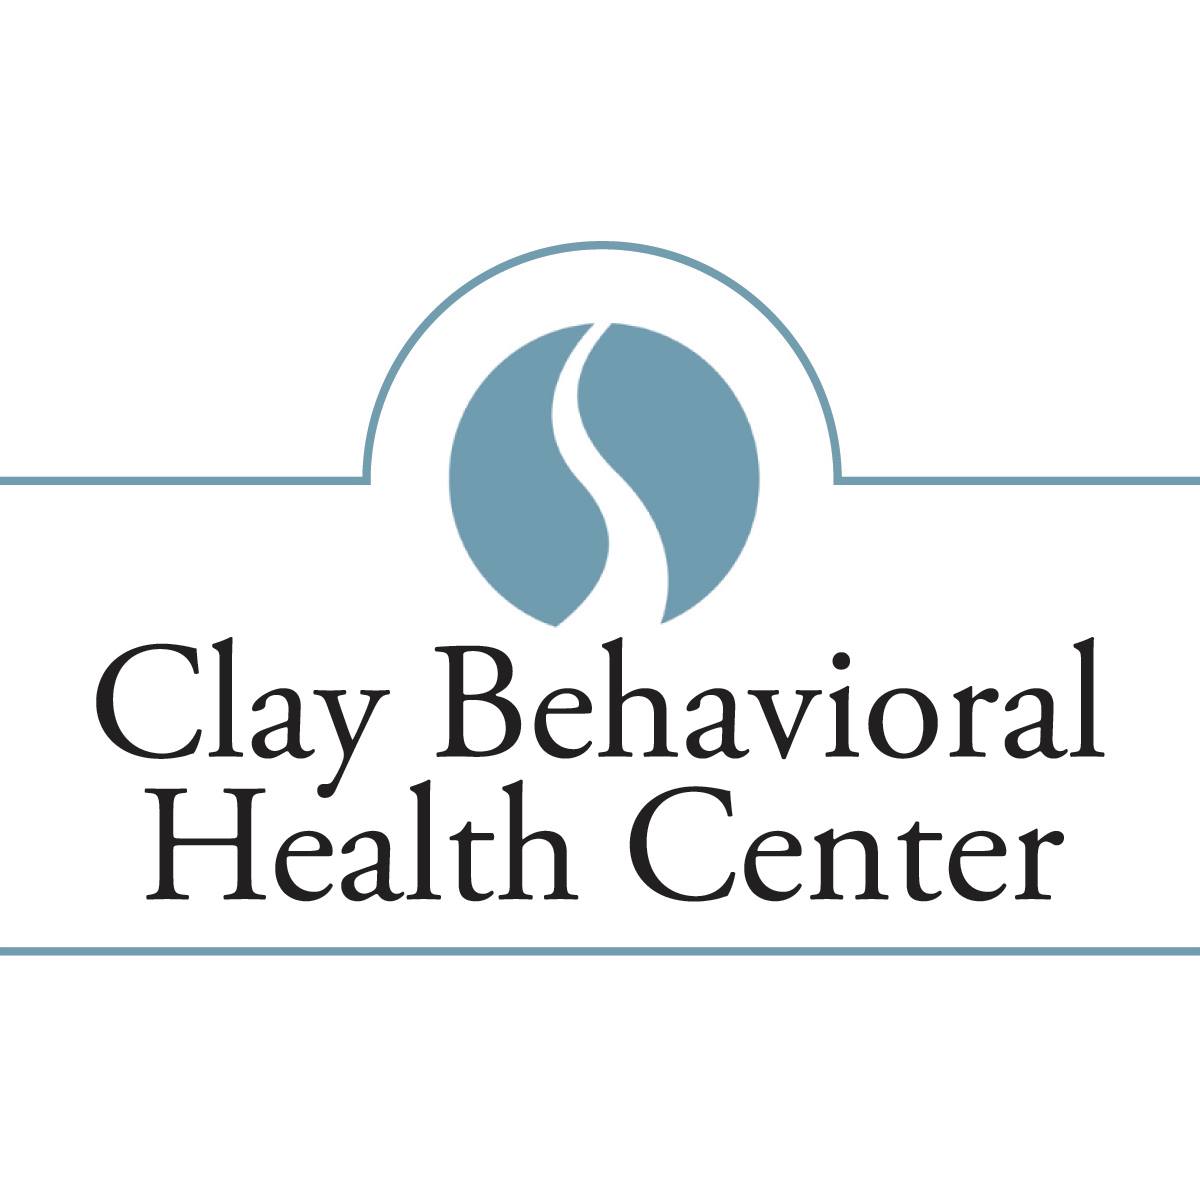 Clay Behavioral Health Center 